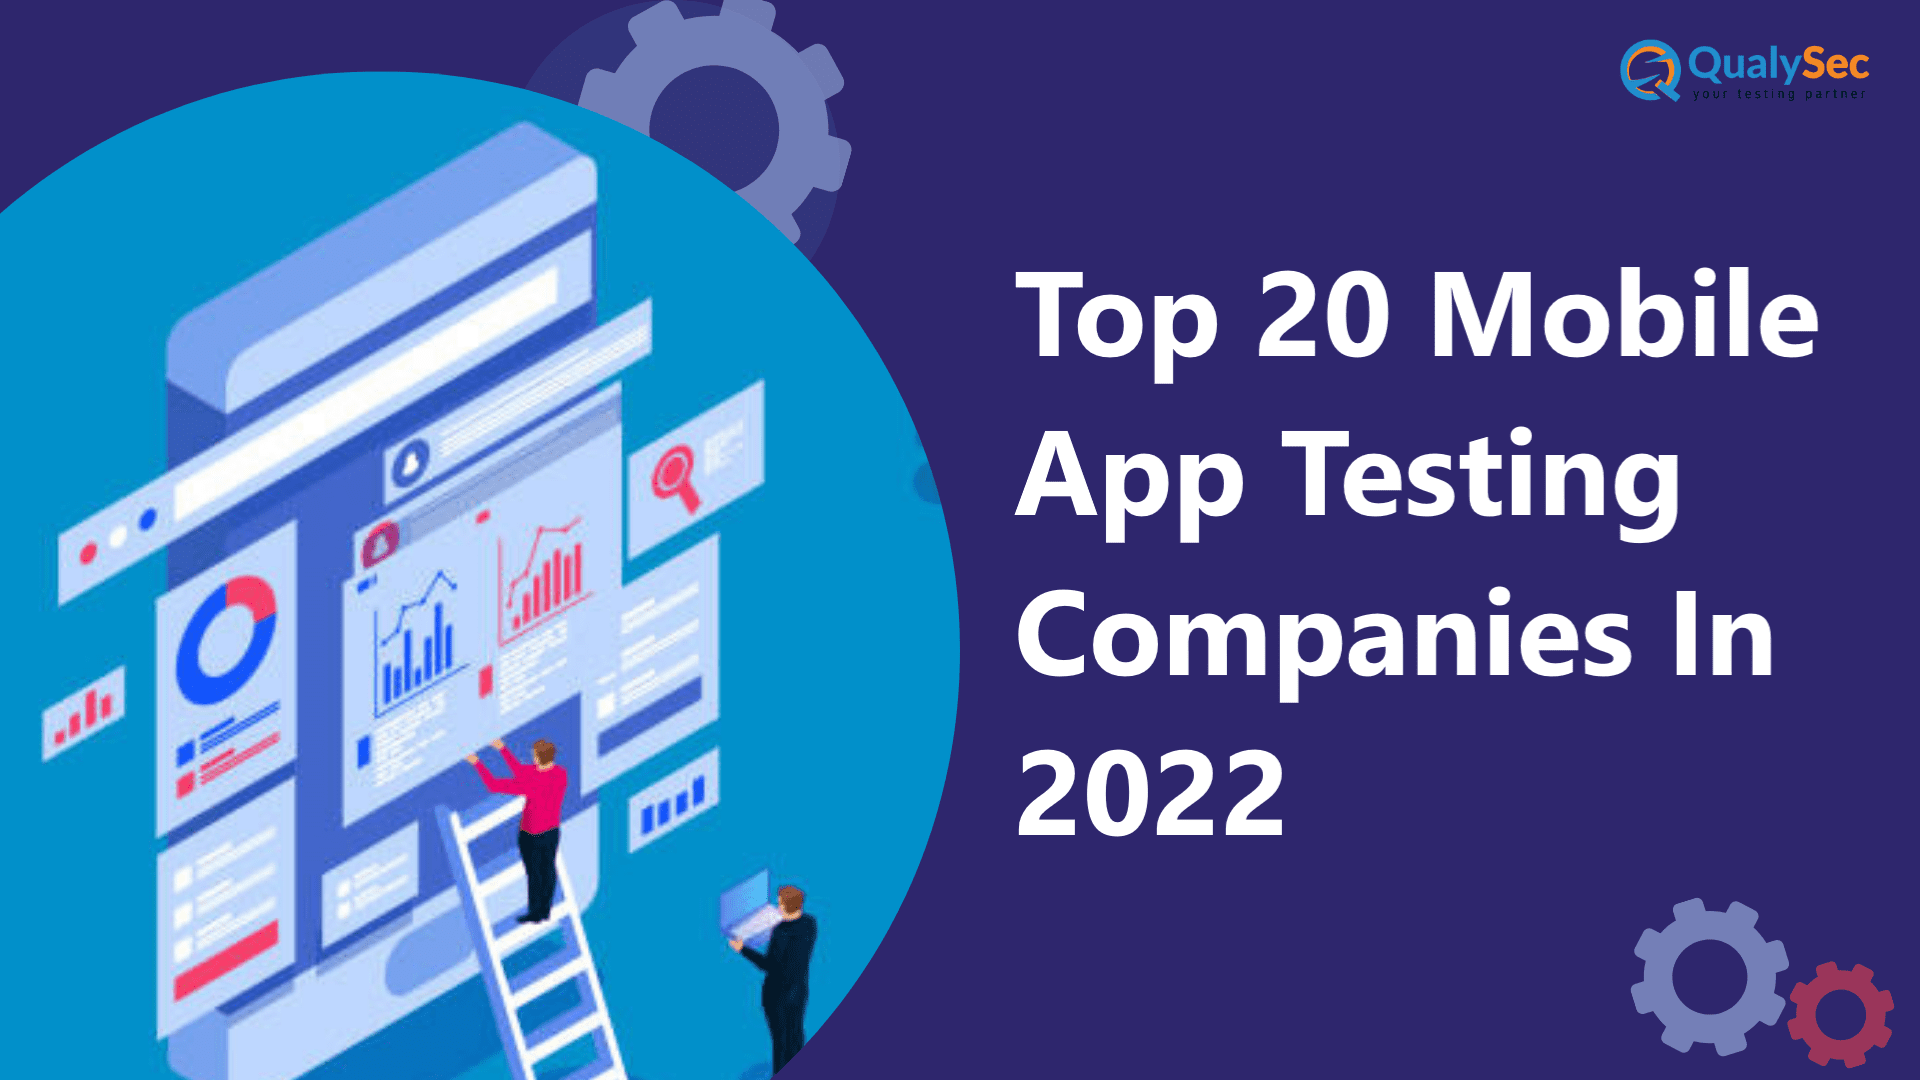 Top 20 Mobile App Testing Companies In 2022